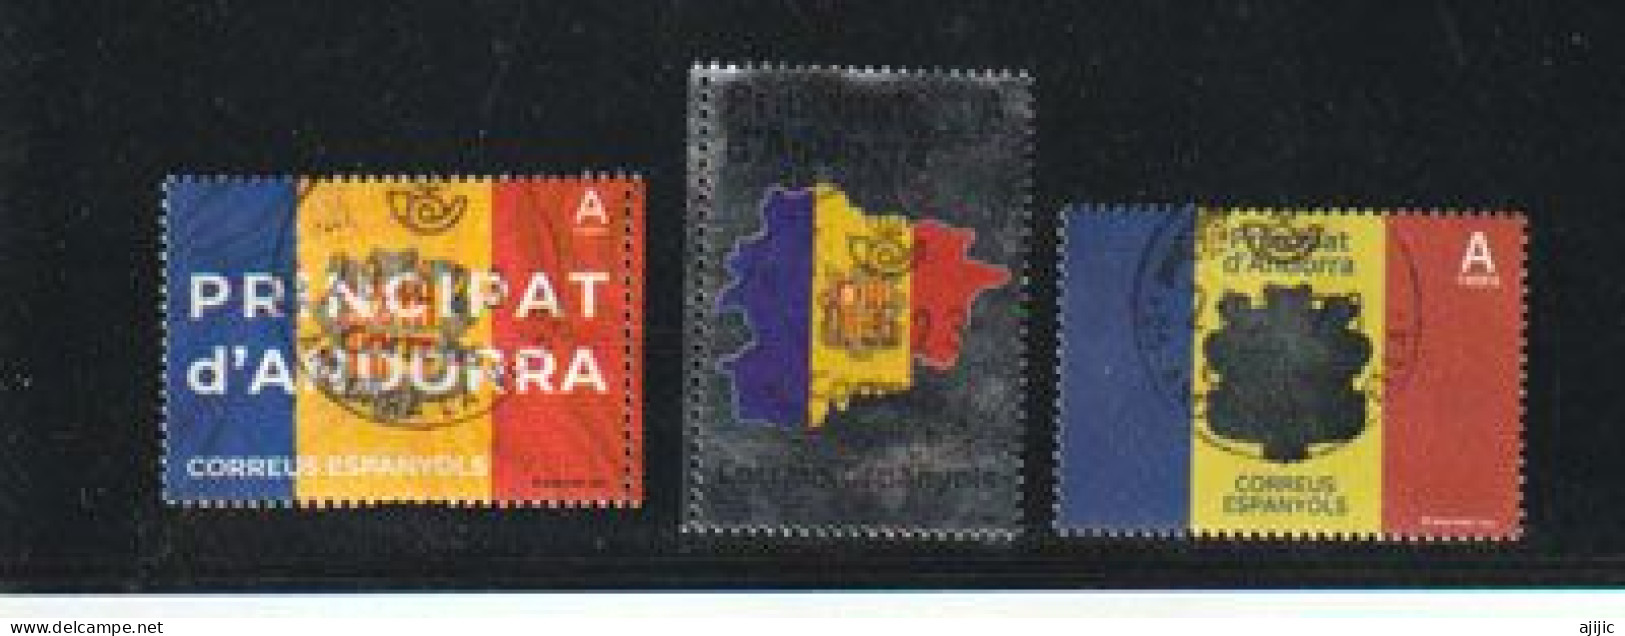 ANDORRA.  FLAGS/ BANDERAS / DRAPEAUX.  3 Timbres Oblitérés, Cancelado,  1ra Calidad - Used Stamps